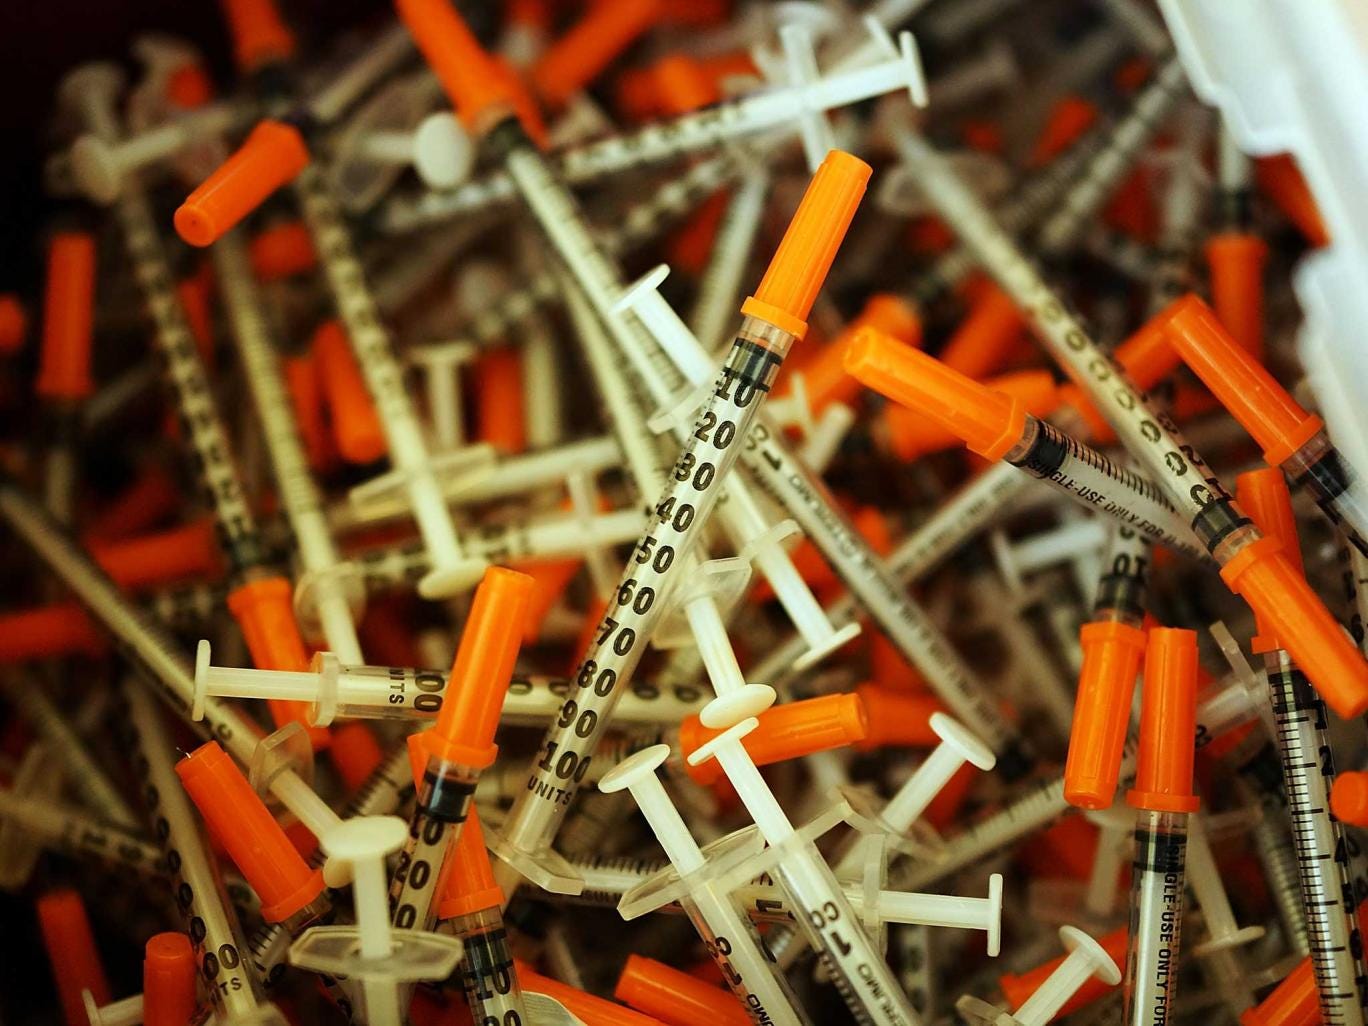 syringes-getty.jpg